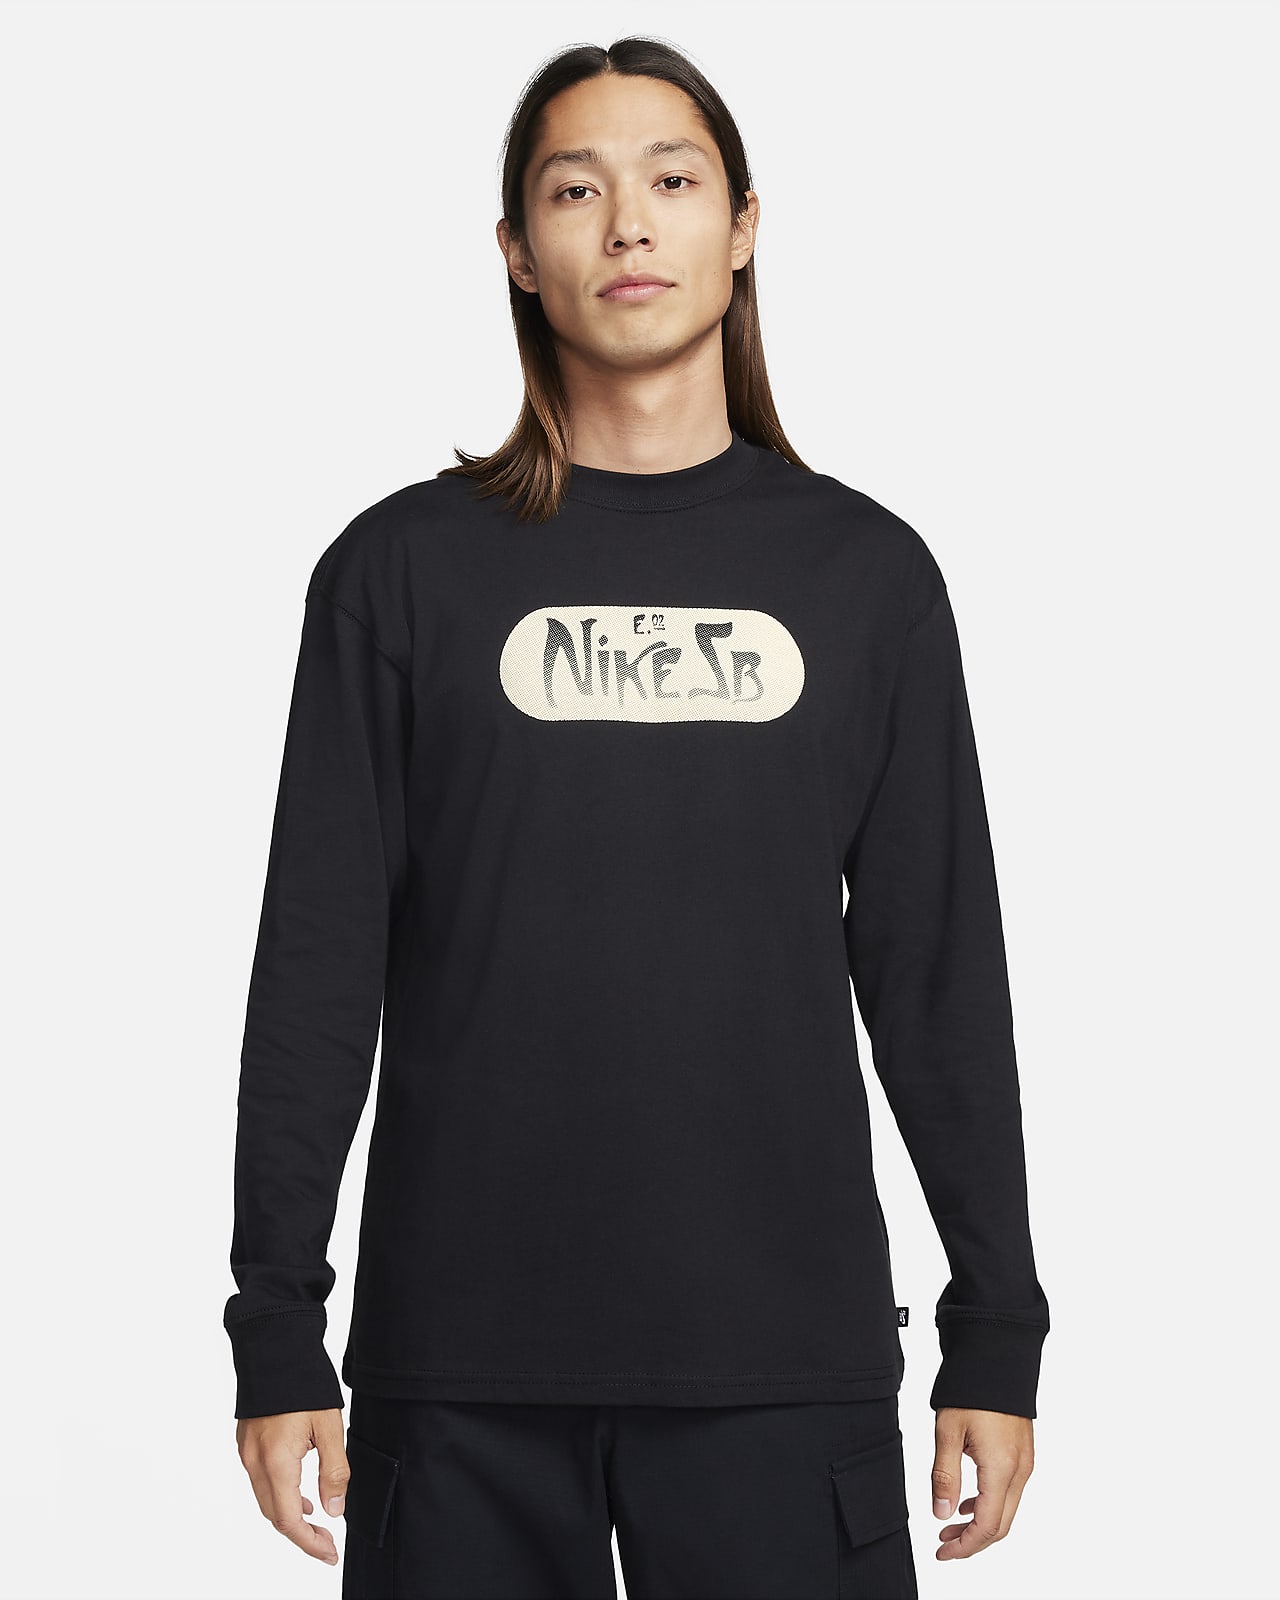 NIKE ロングスリーブスケートボード Tシャツ ナイキ 5670円 is-technics.fi